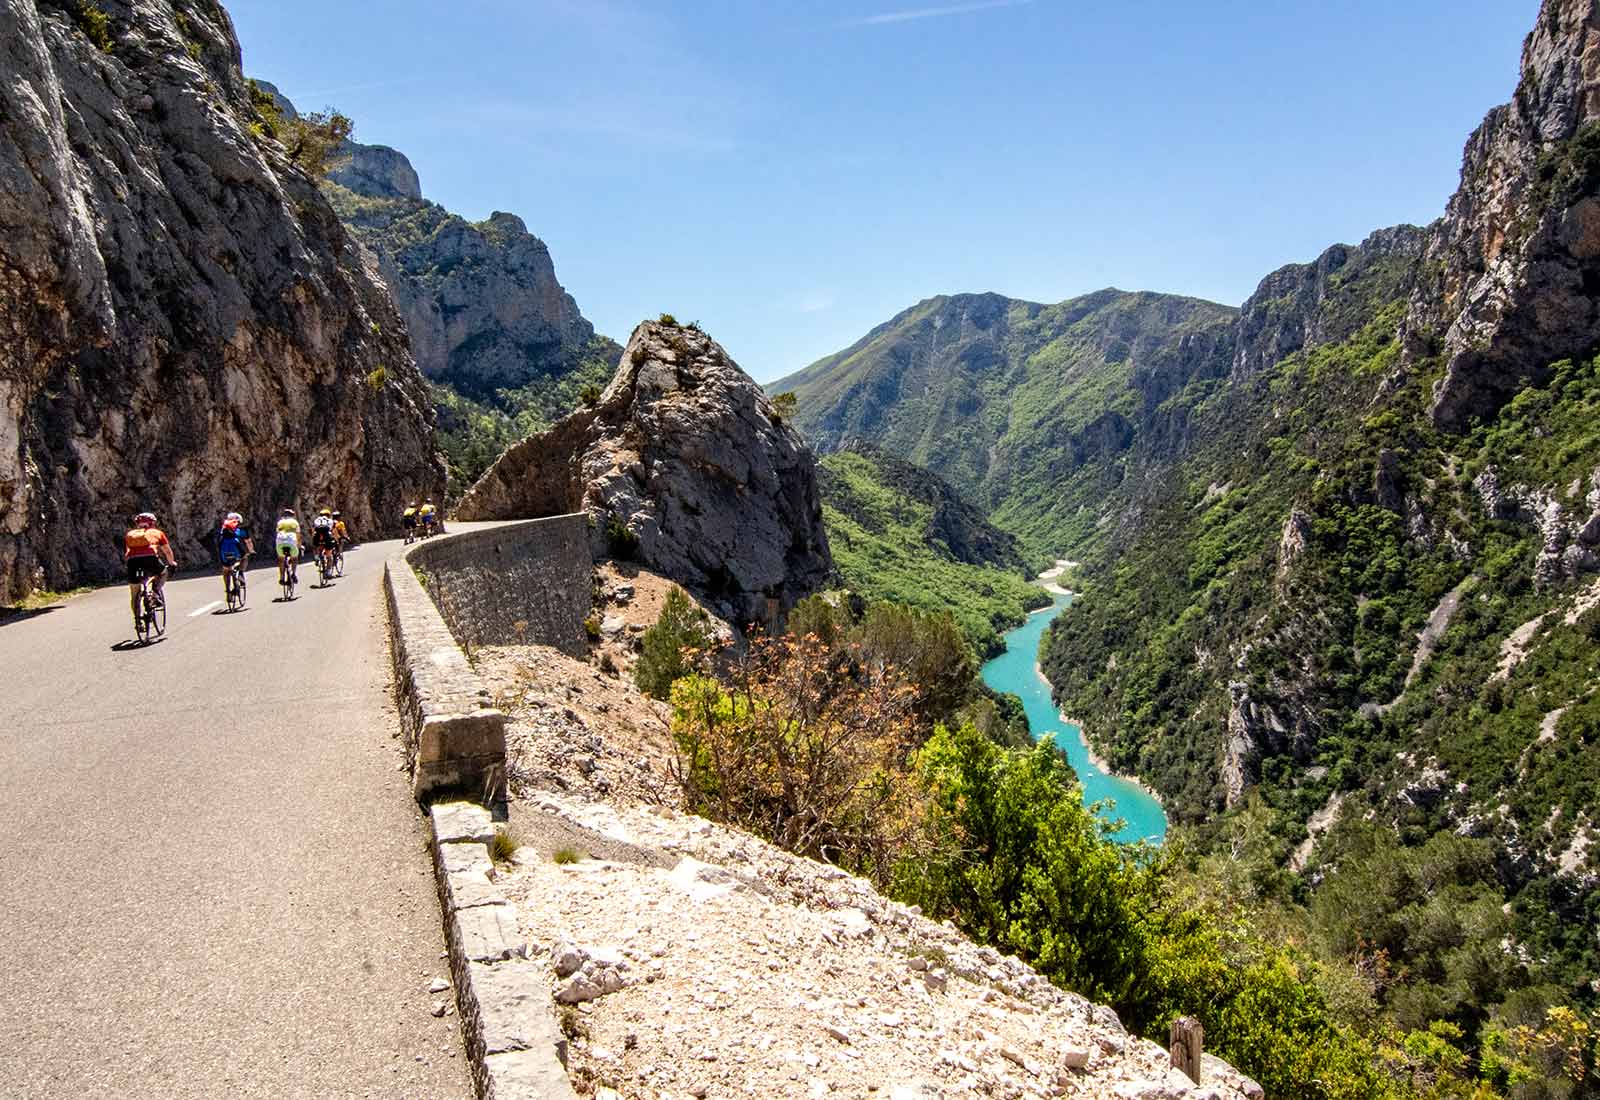 Cyclists make the climb through the Gorges du Verdon towards Col d'Ayen and La Palud